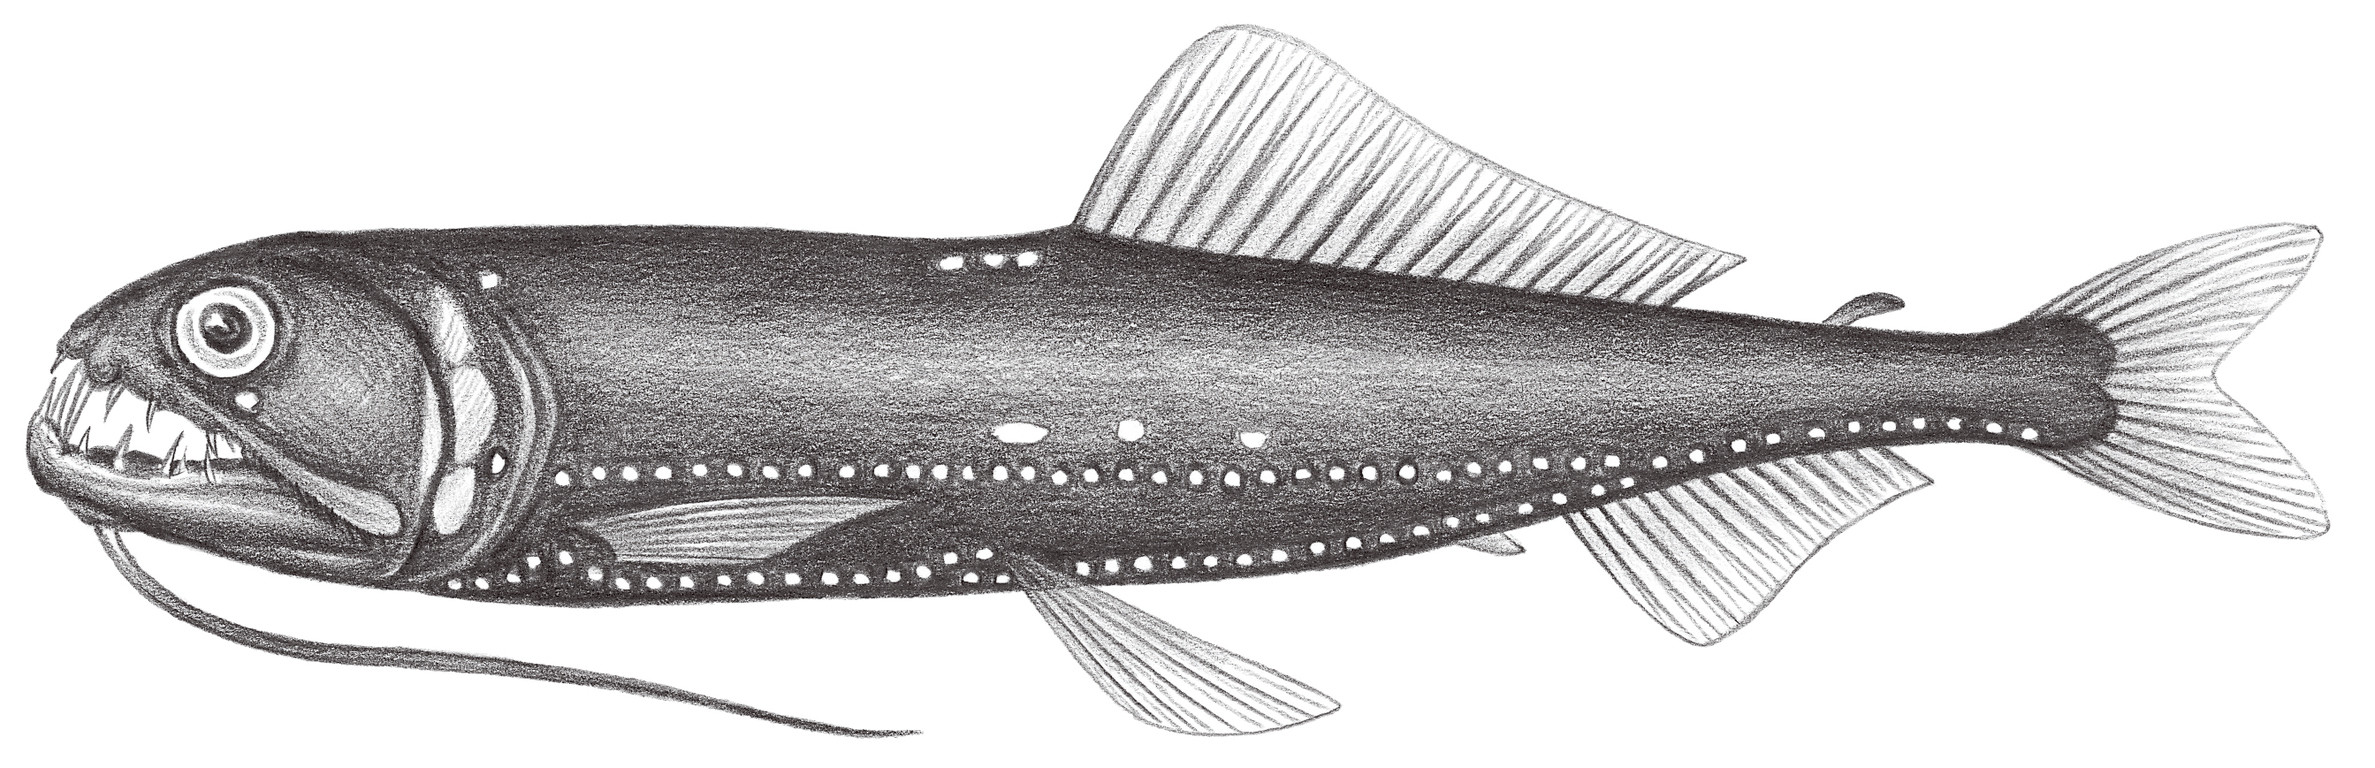 431.	印度太平洋食星魚 Astronesthes indopacifica Parin & Borodulina, 1997